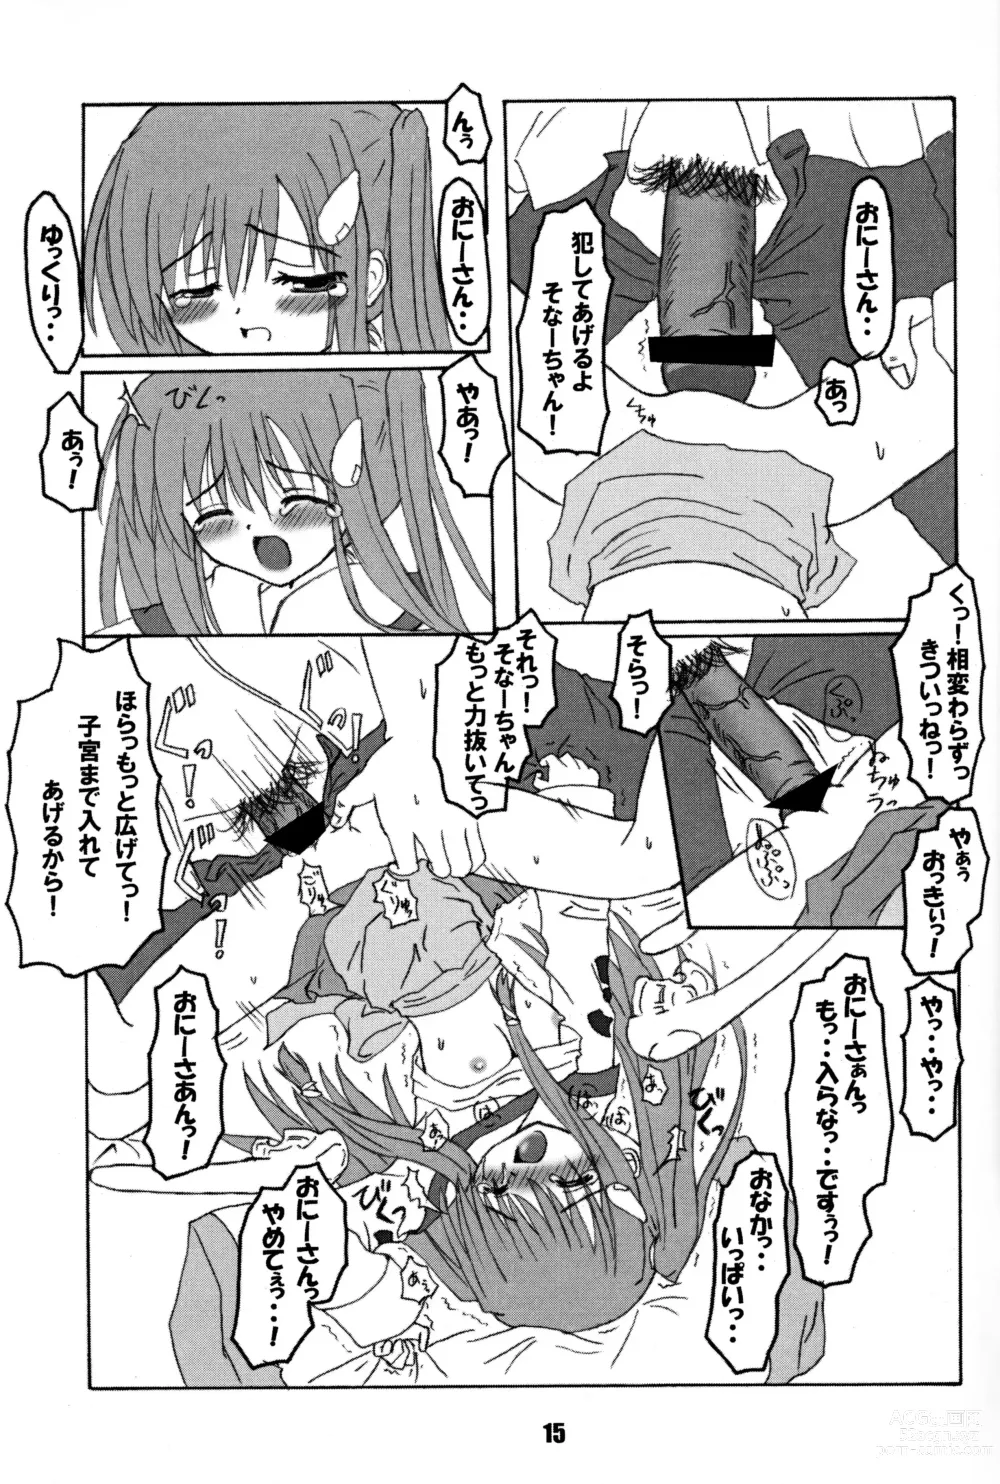 Page 14 of doujinshi Rollin 9